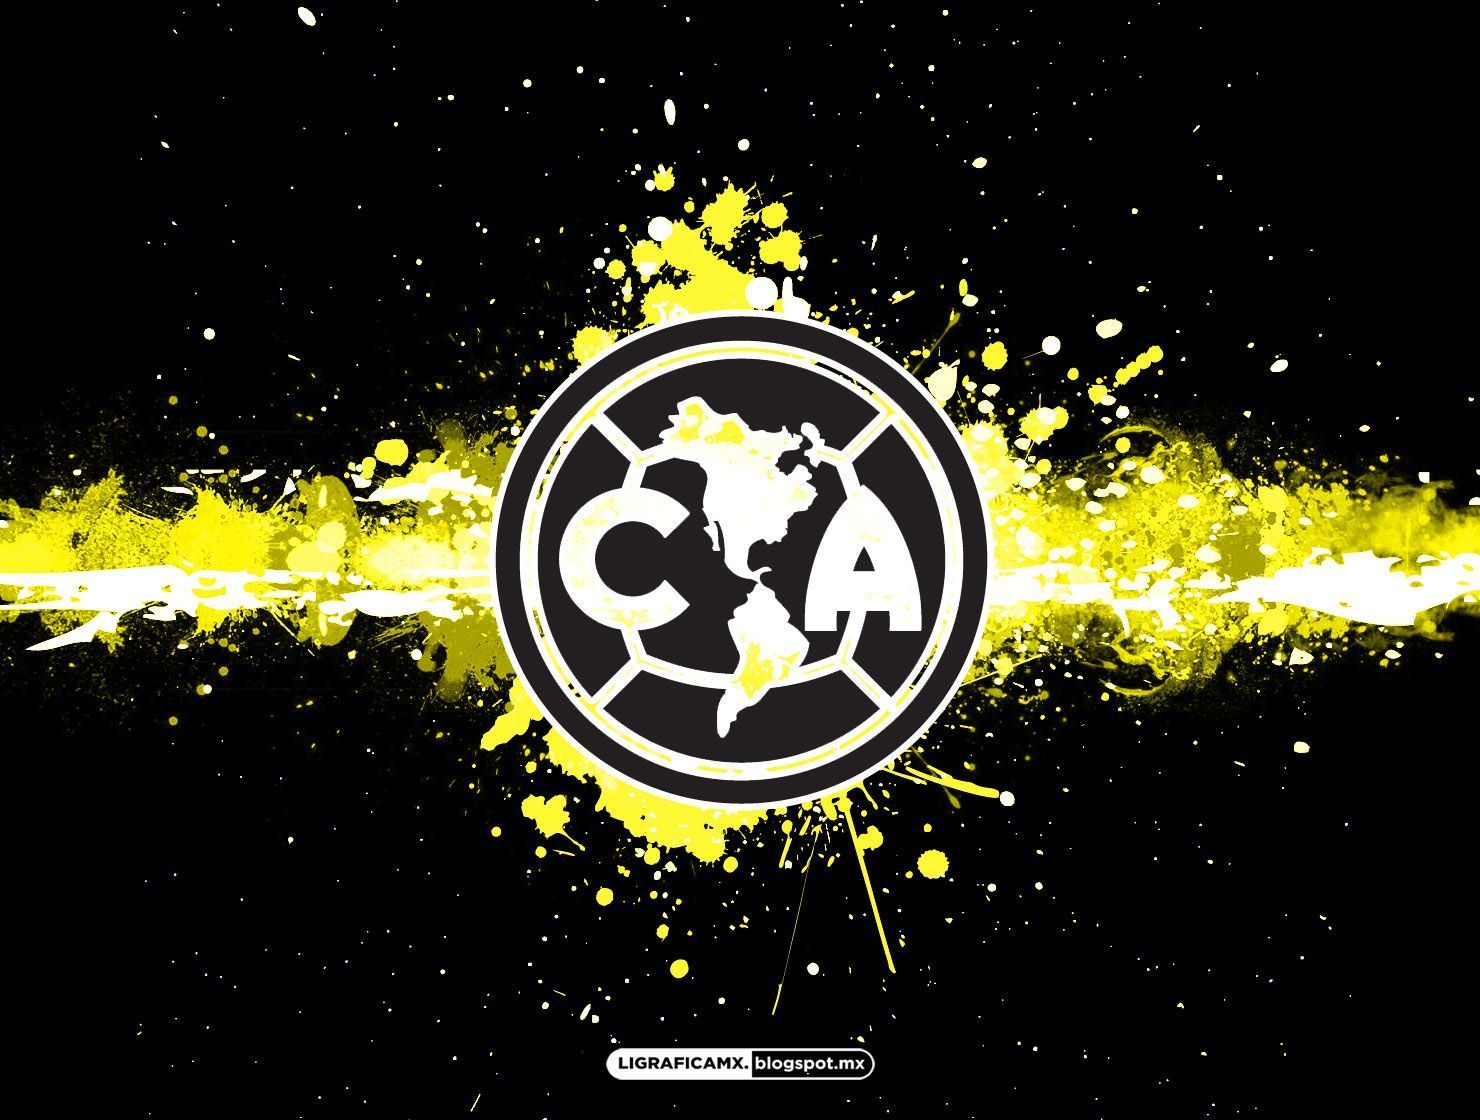 Club America Logo Wallpapers 4k Hd Club America Logo Backgrounds On Wallpaperbat